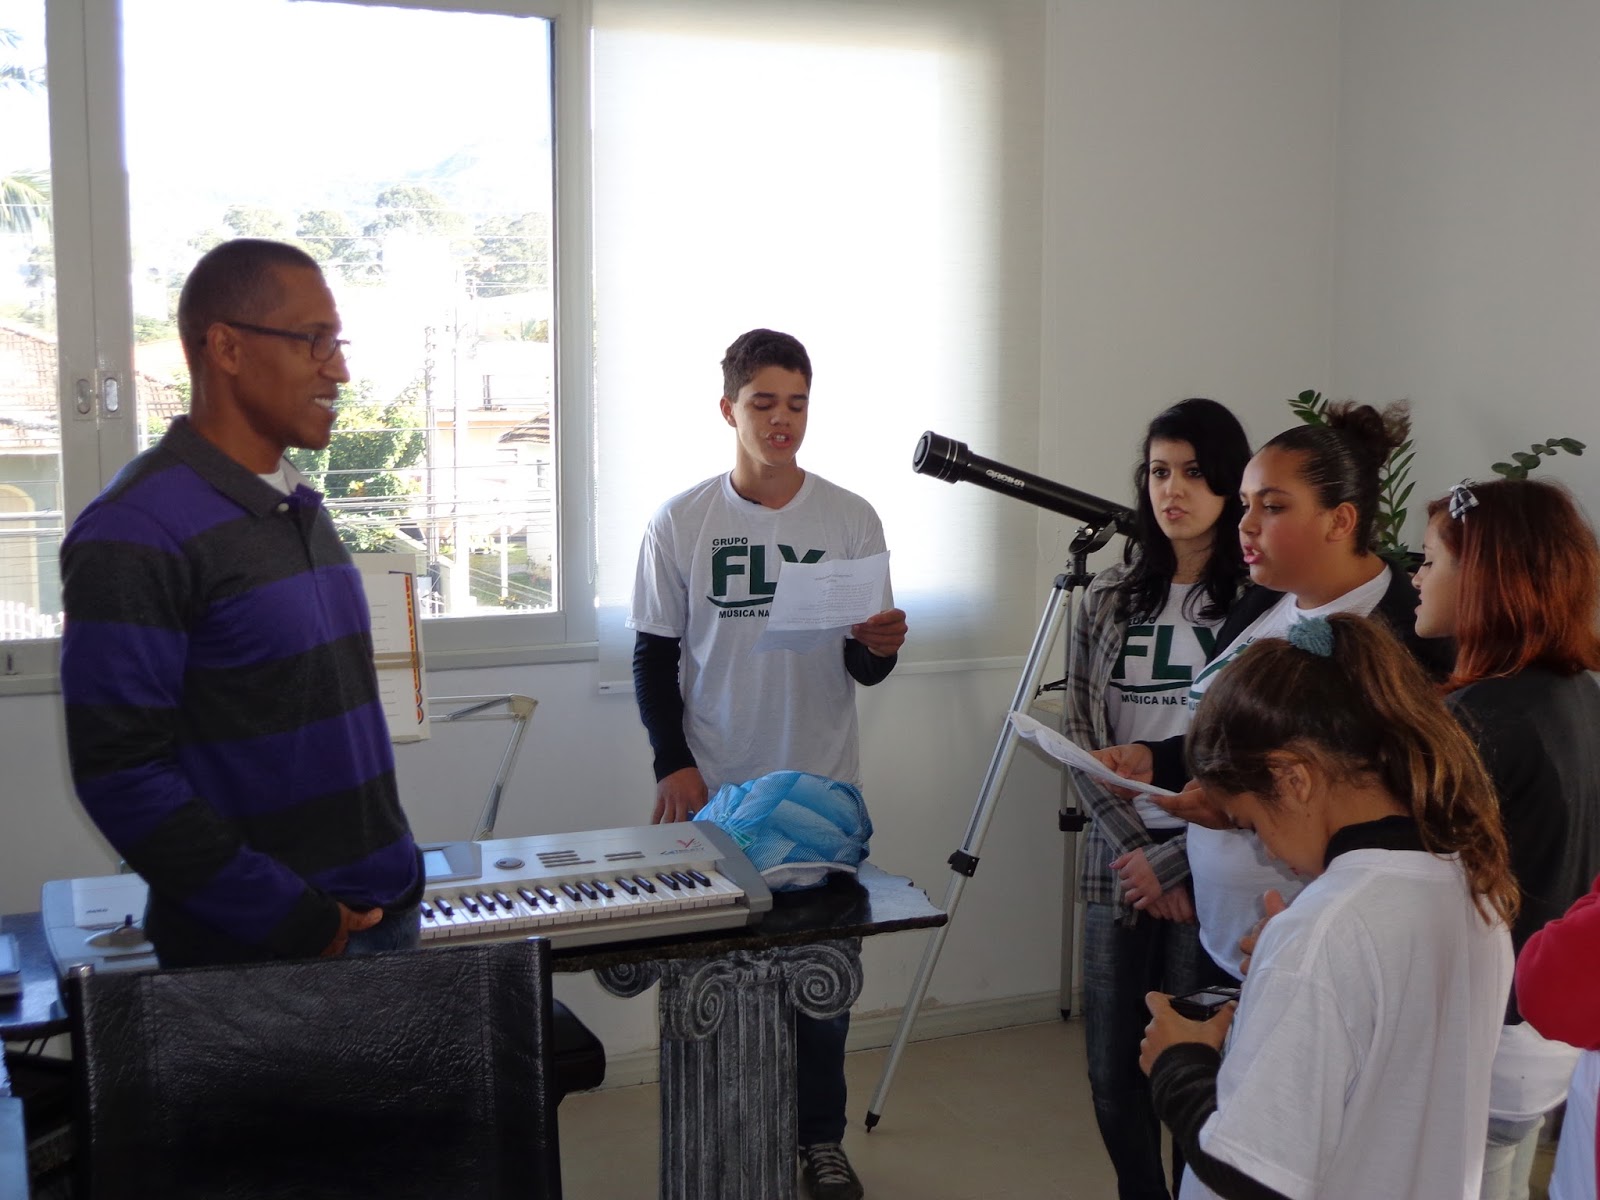 Grupo Fly - Música Na Escola: ESCOLA BENONÍVIO 2013